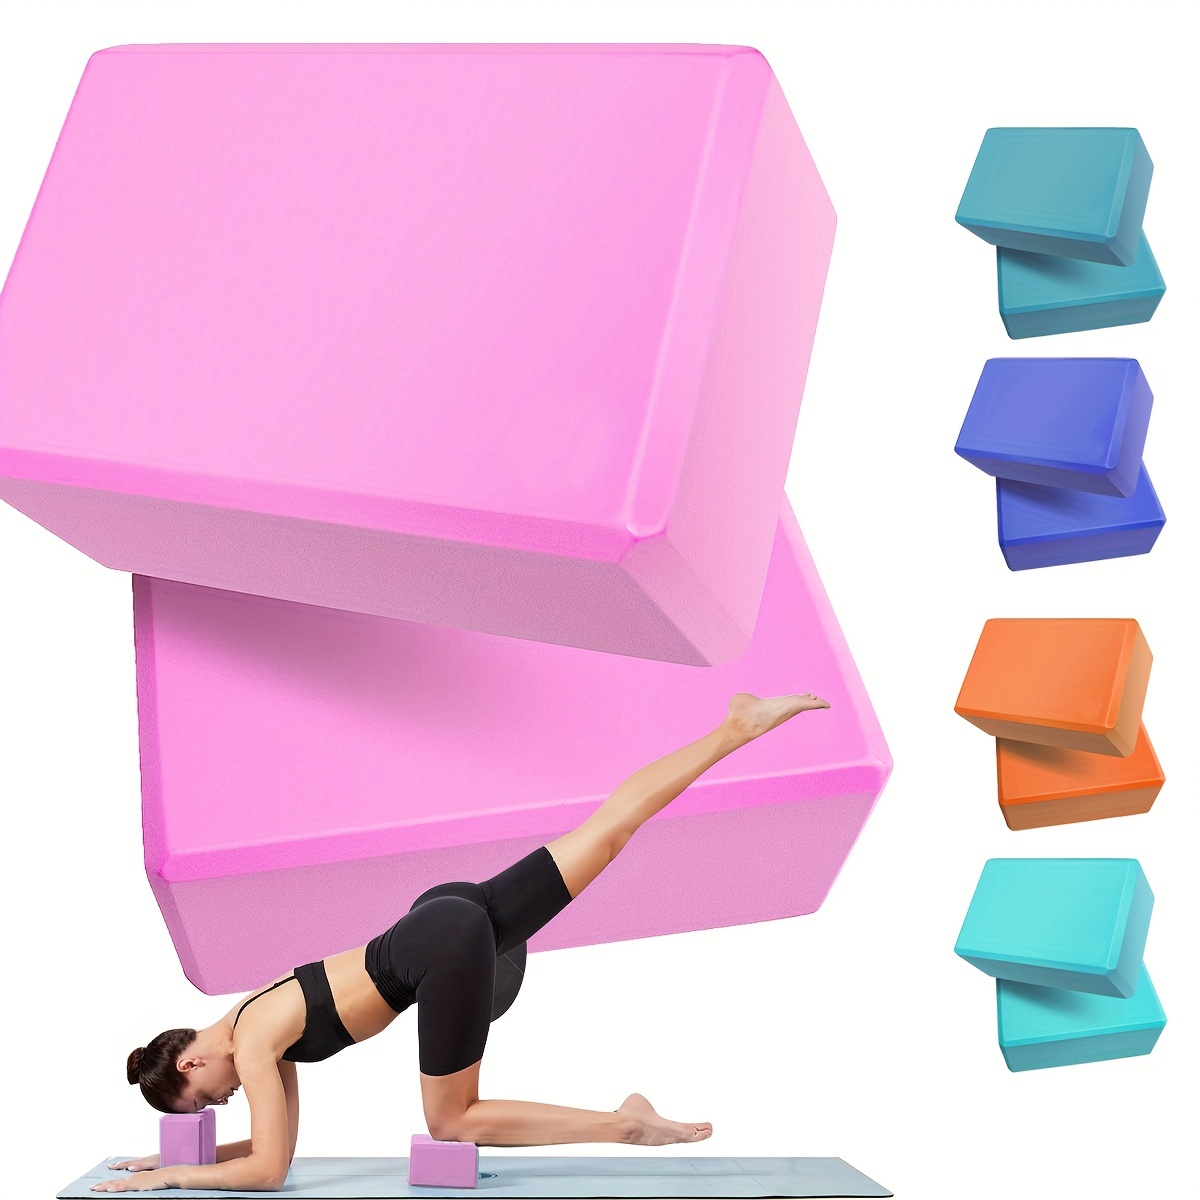 2pcs Yoga Pilates Eva Foam Block Bricks Sports Exercise Practice Fitness  Gym Workout Stretching Aid Tool